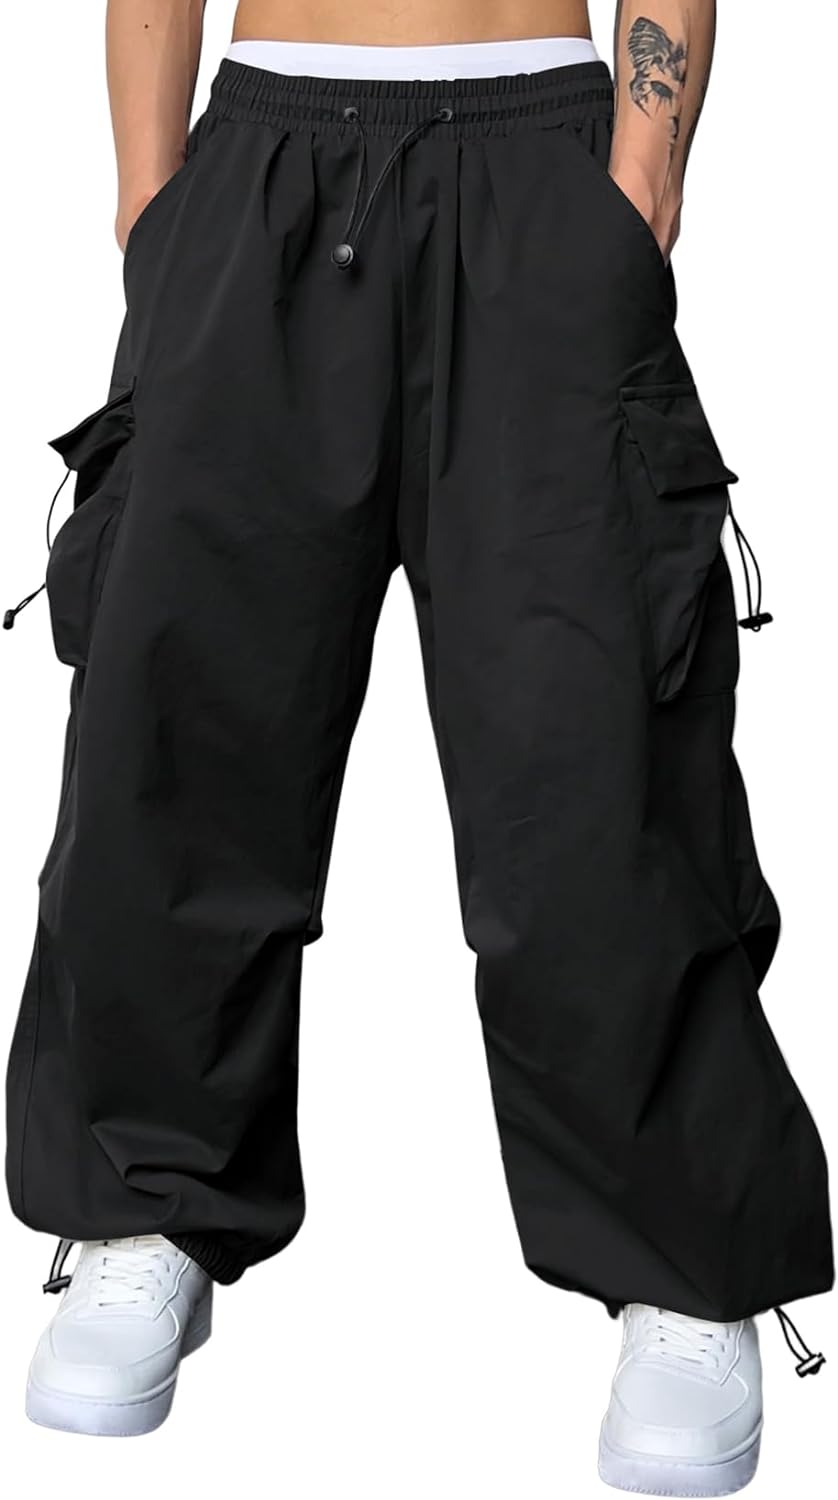 Parachute Pants for Women Solid Color Baggy Cargo Pants Casual